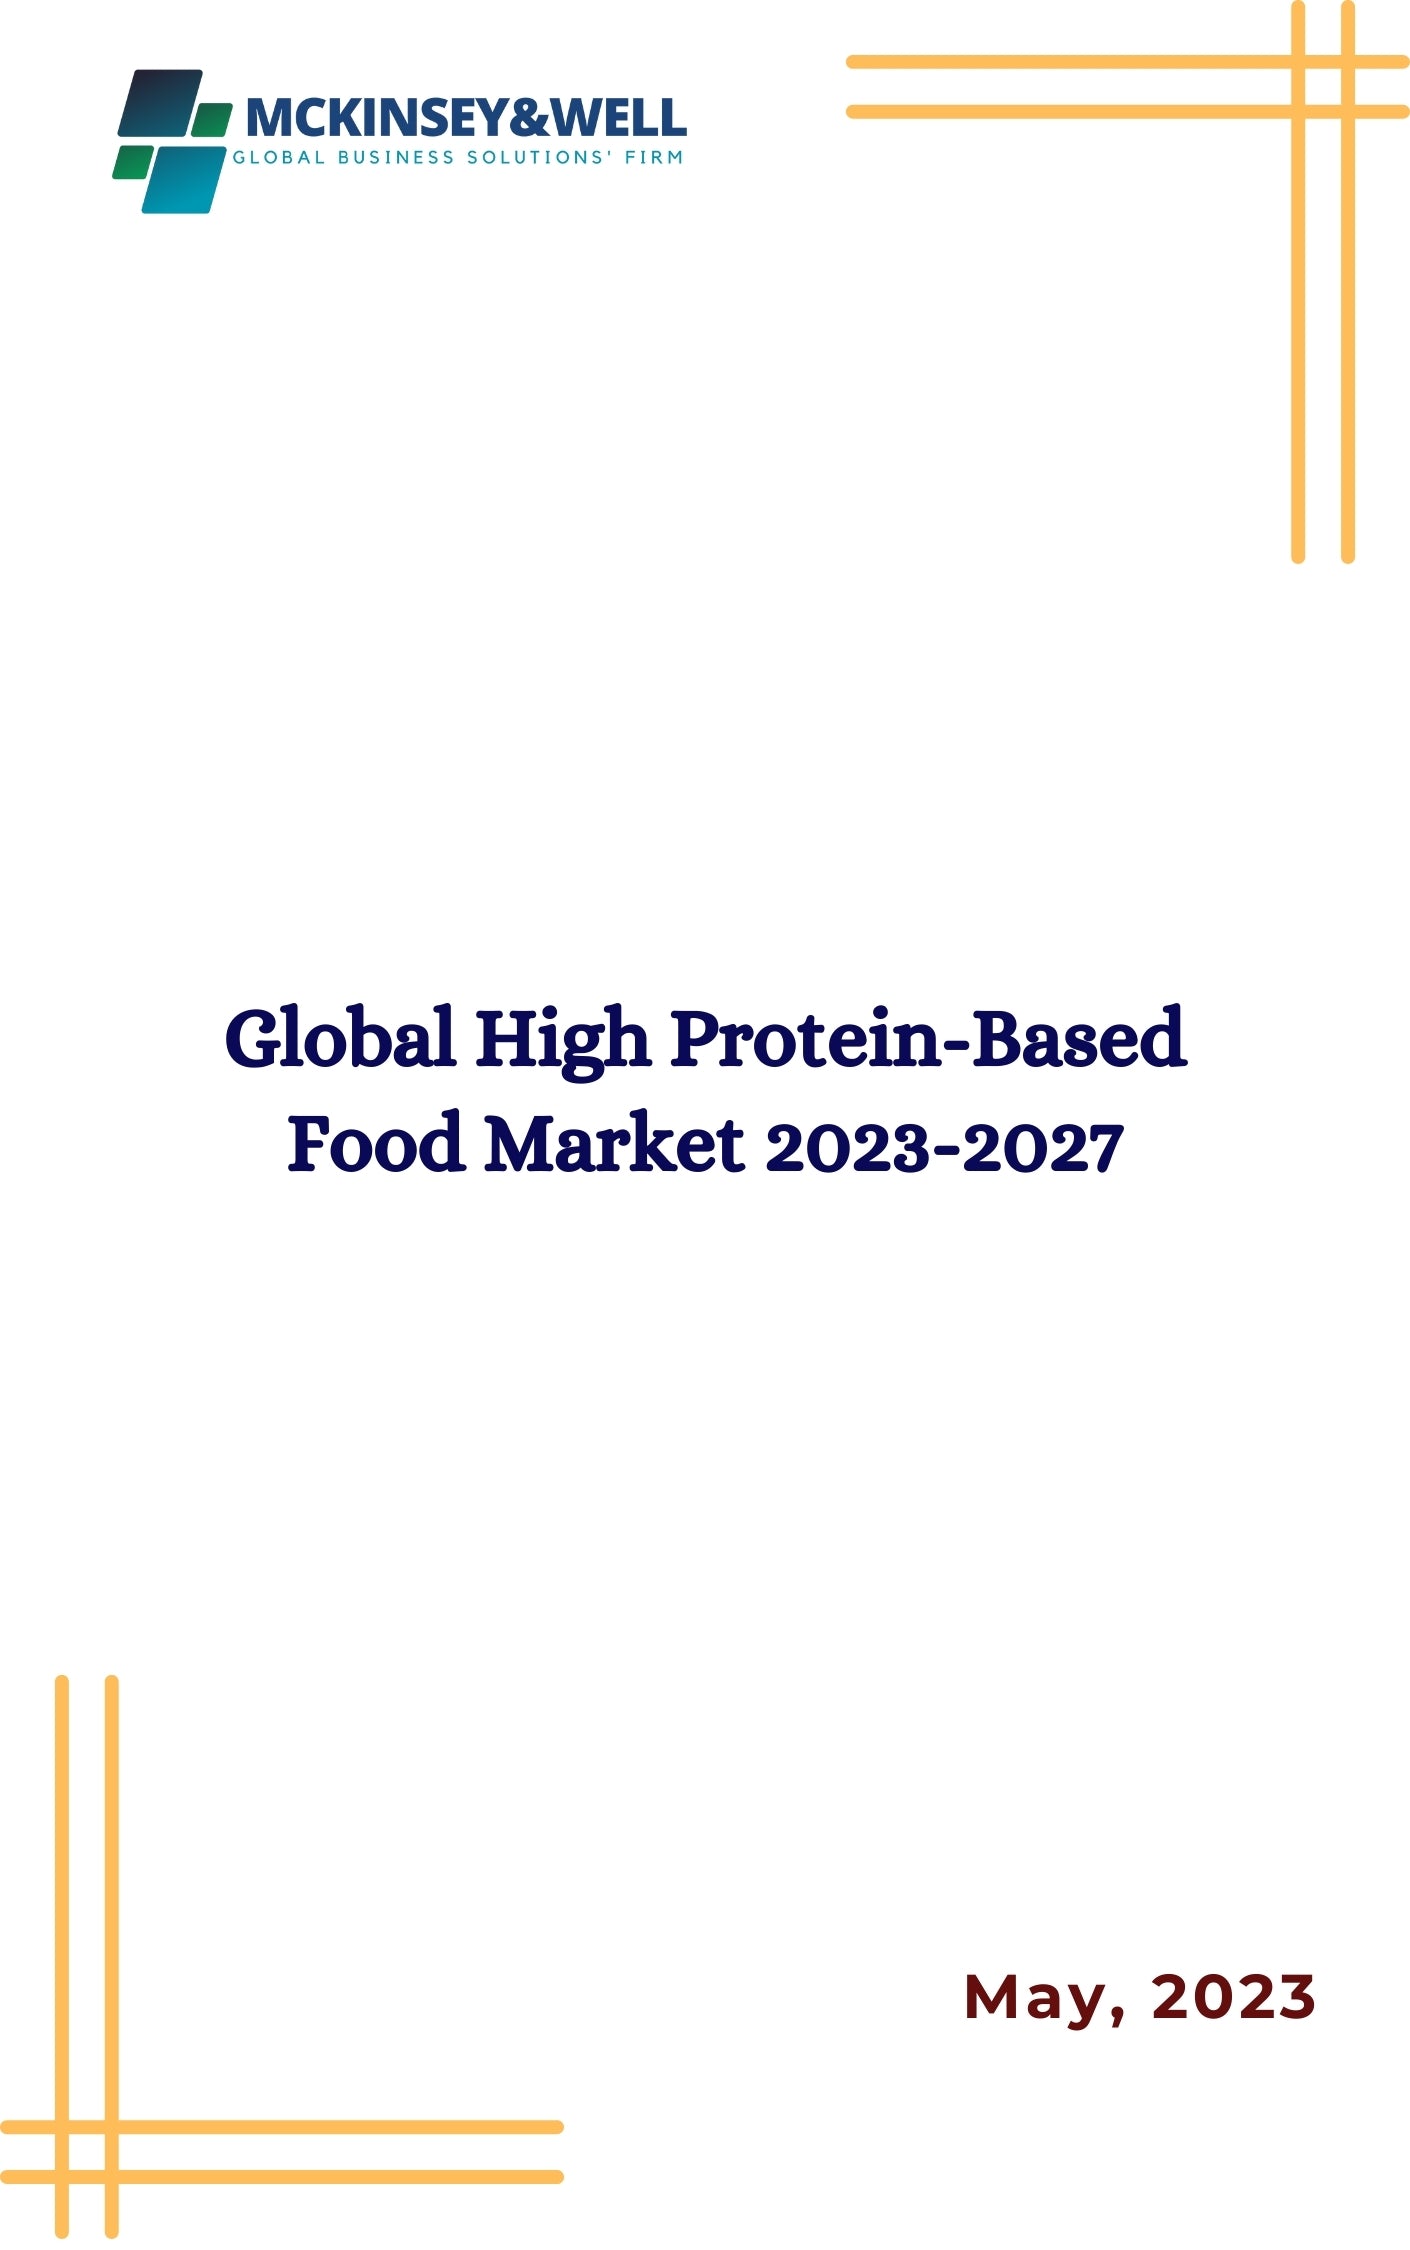 Global High Protein-Based Food Market 2023-2027